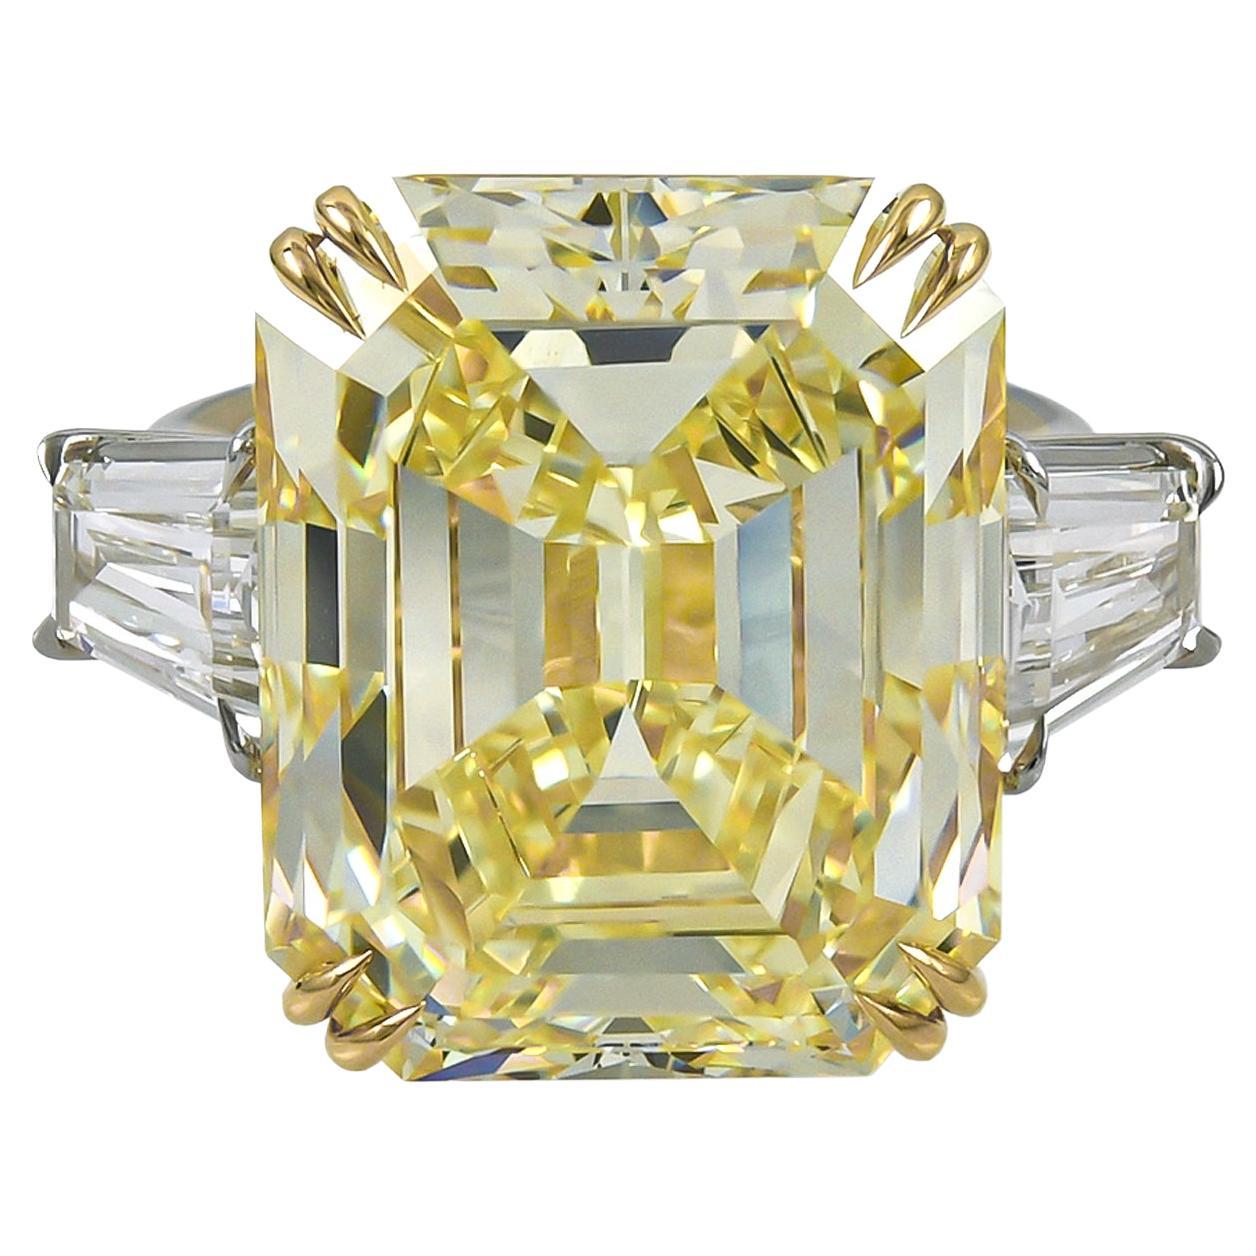 Spectra Fine Jewelry GIA Certified 23.16 Carat Fancy Yellow Diamond Ring For Sale